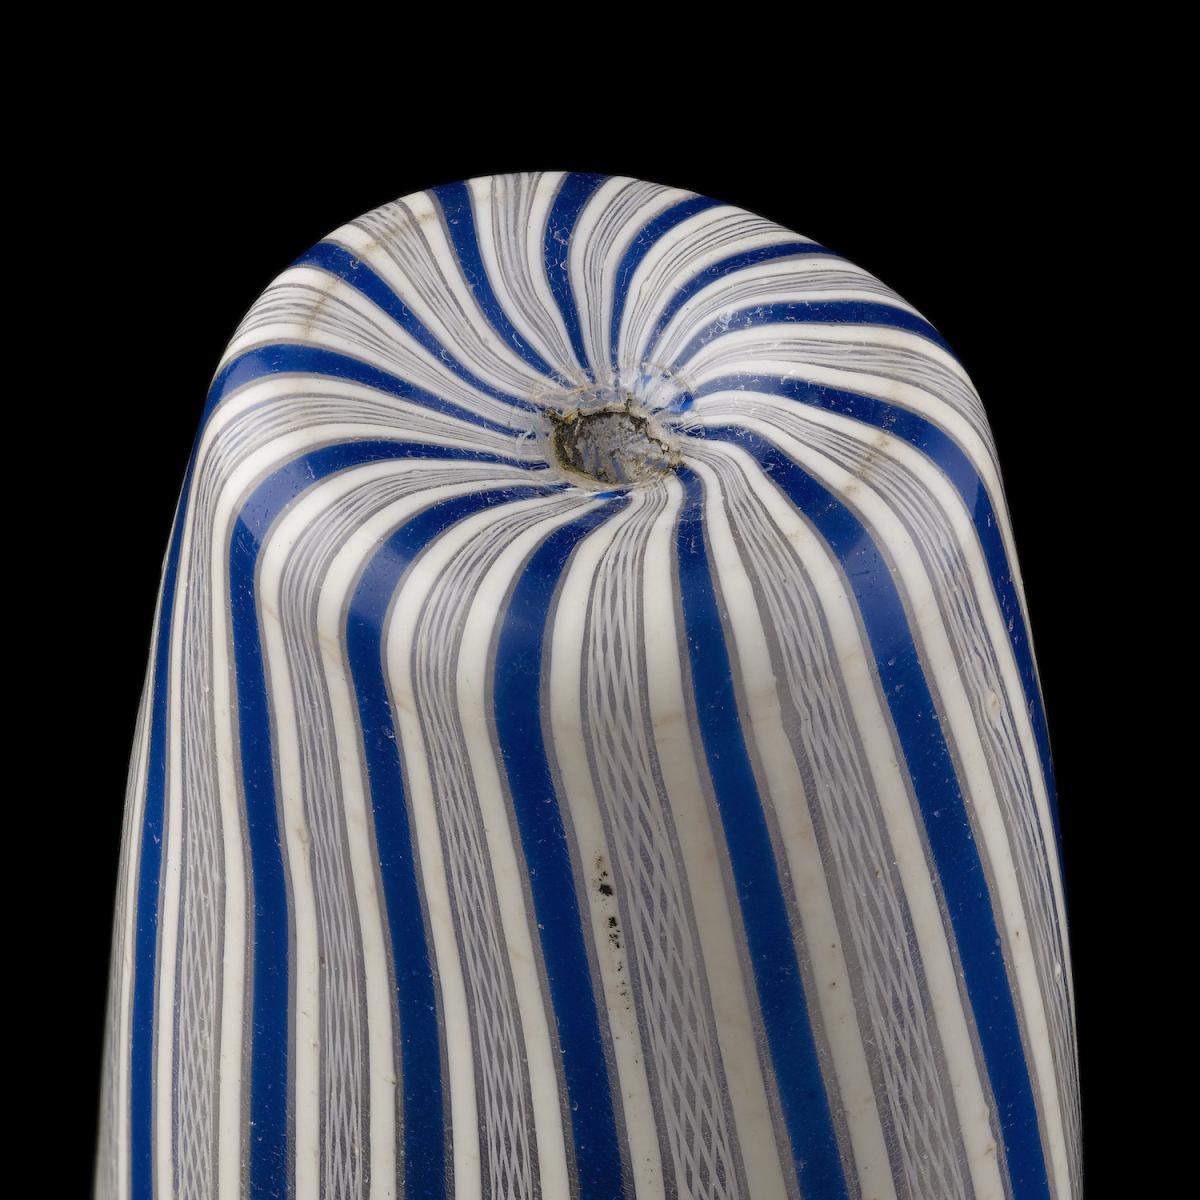 Glass Beaker with Blue and White Fili and Retortoli